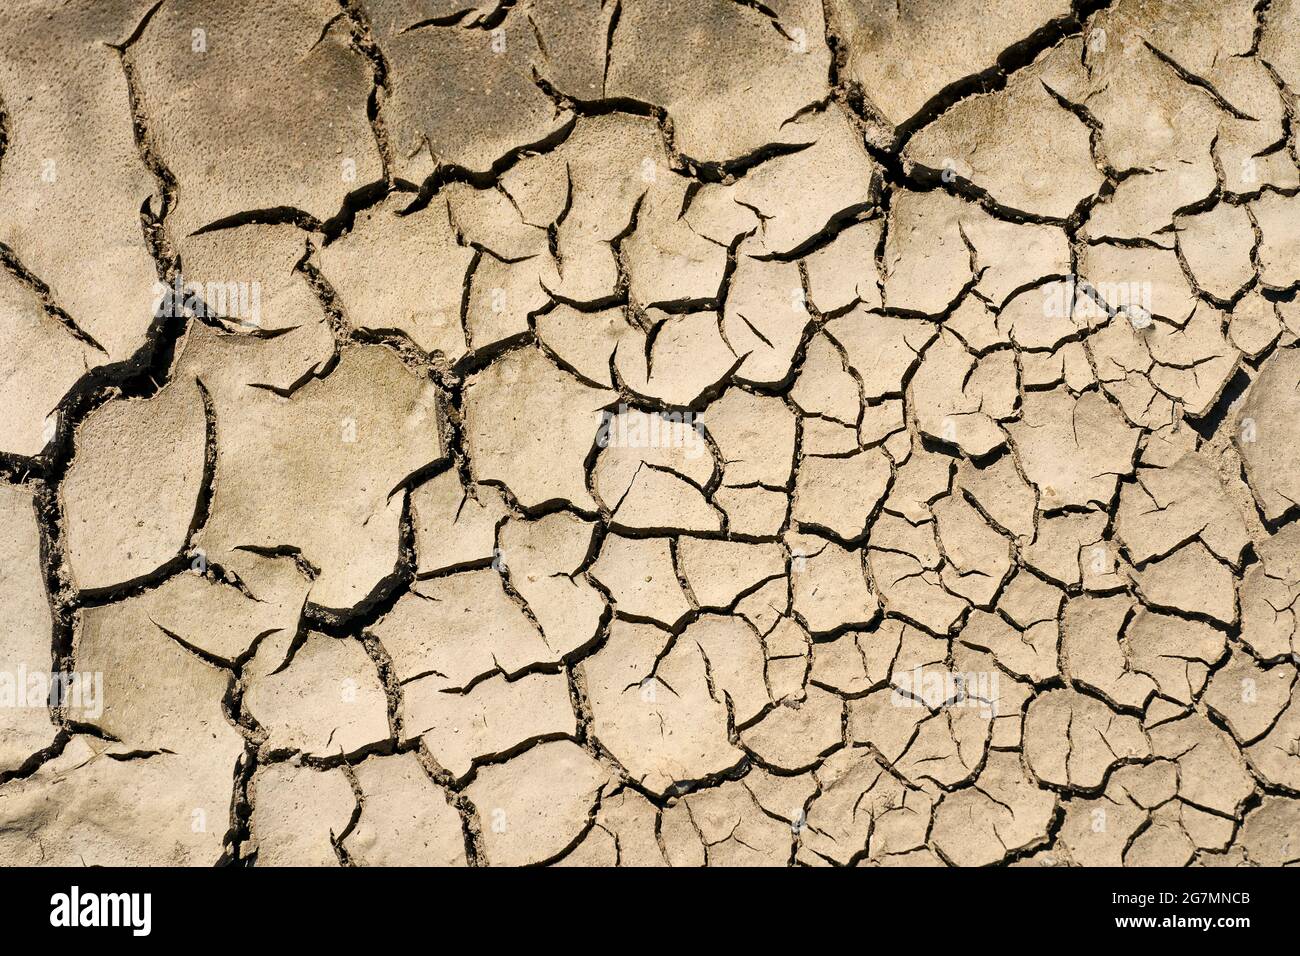 Cracked Dry Barren Earth. Fehraltorf, Switzerland Stock Photo